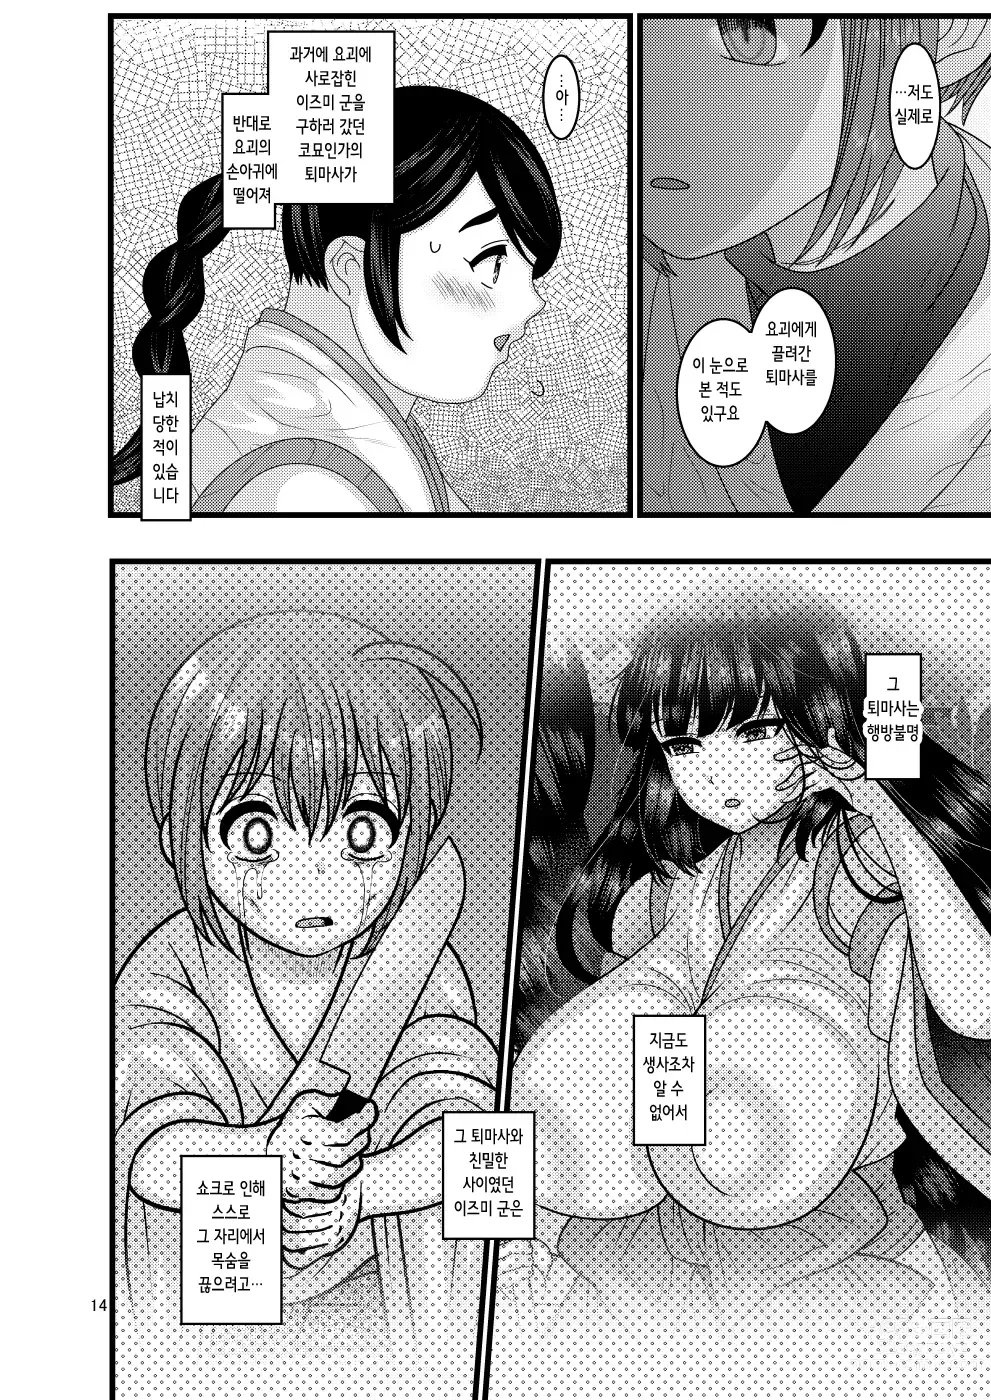 Page 15 of doujinshi 떨어지는 꽃 보탄과 키쿄우 편 2